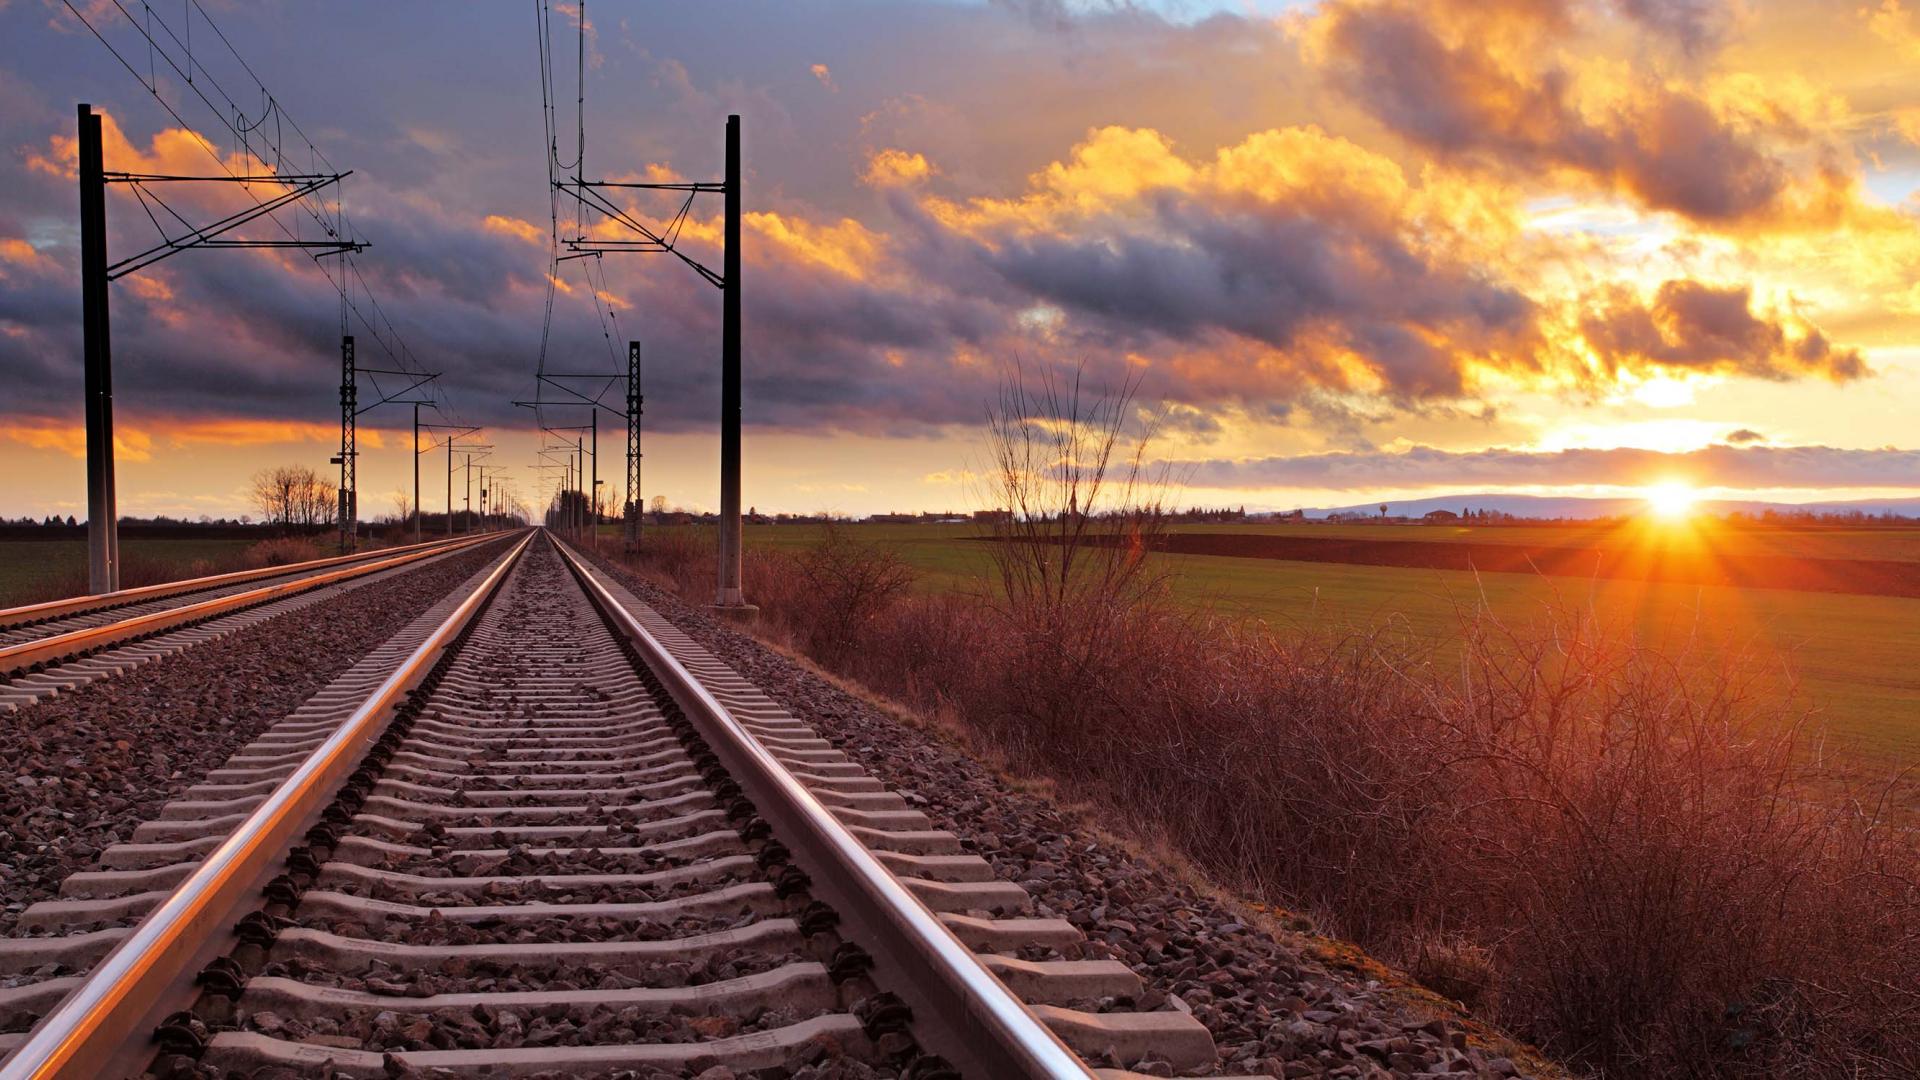 Train track at sunset